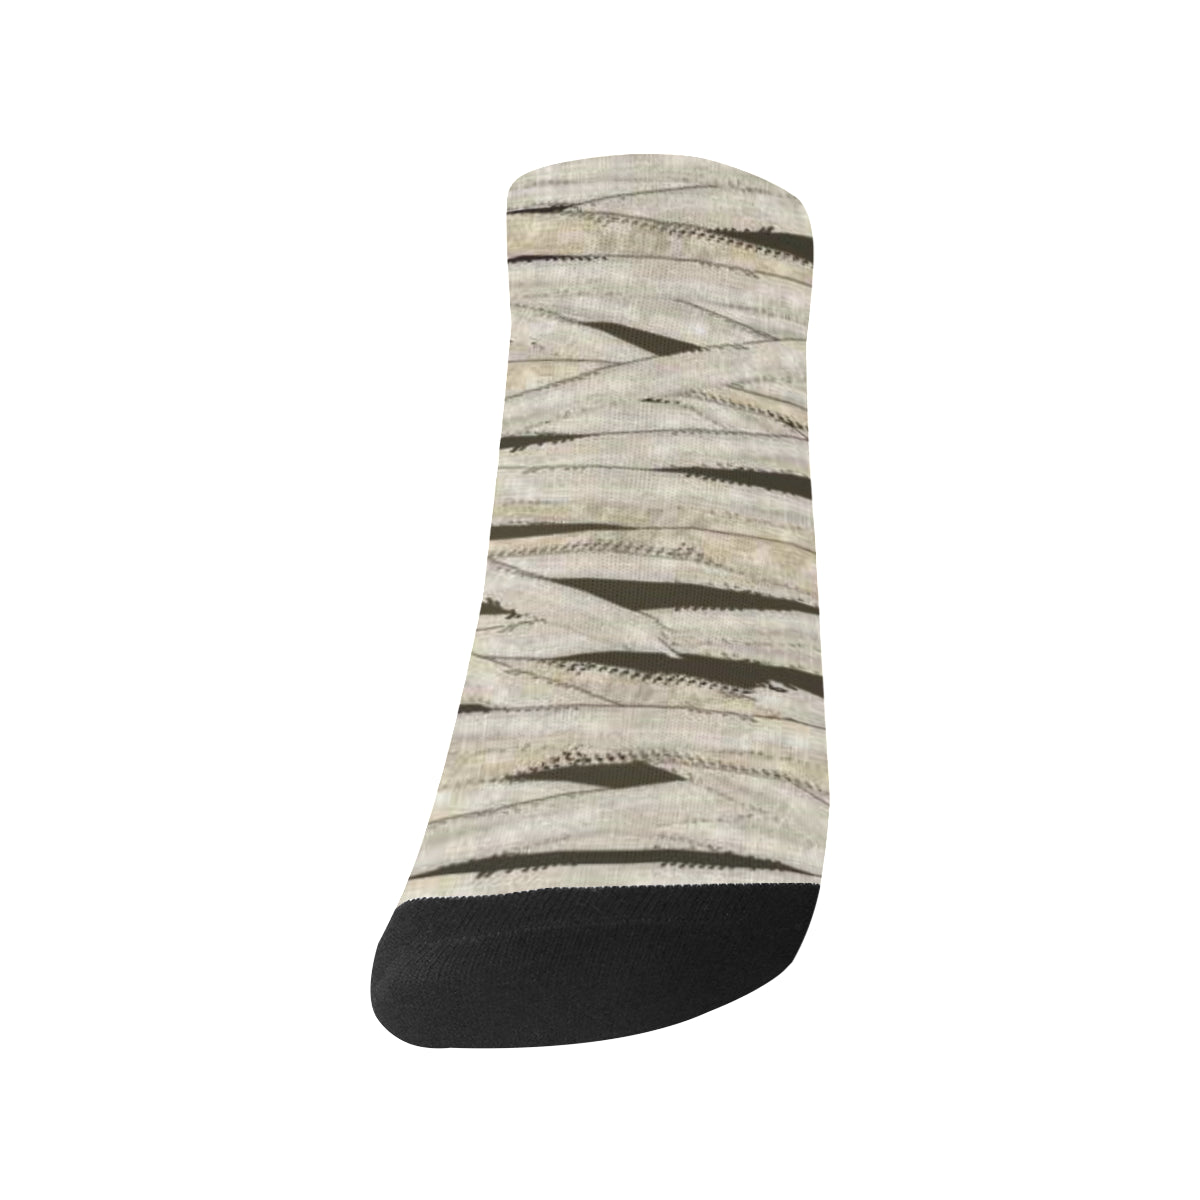 Mummy Wraps Men's Ankle Socks